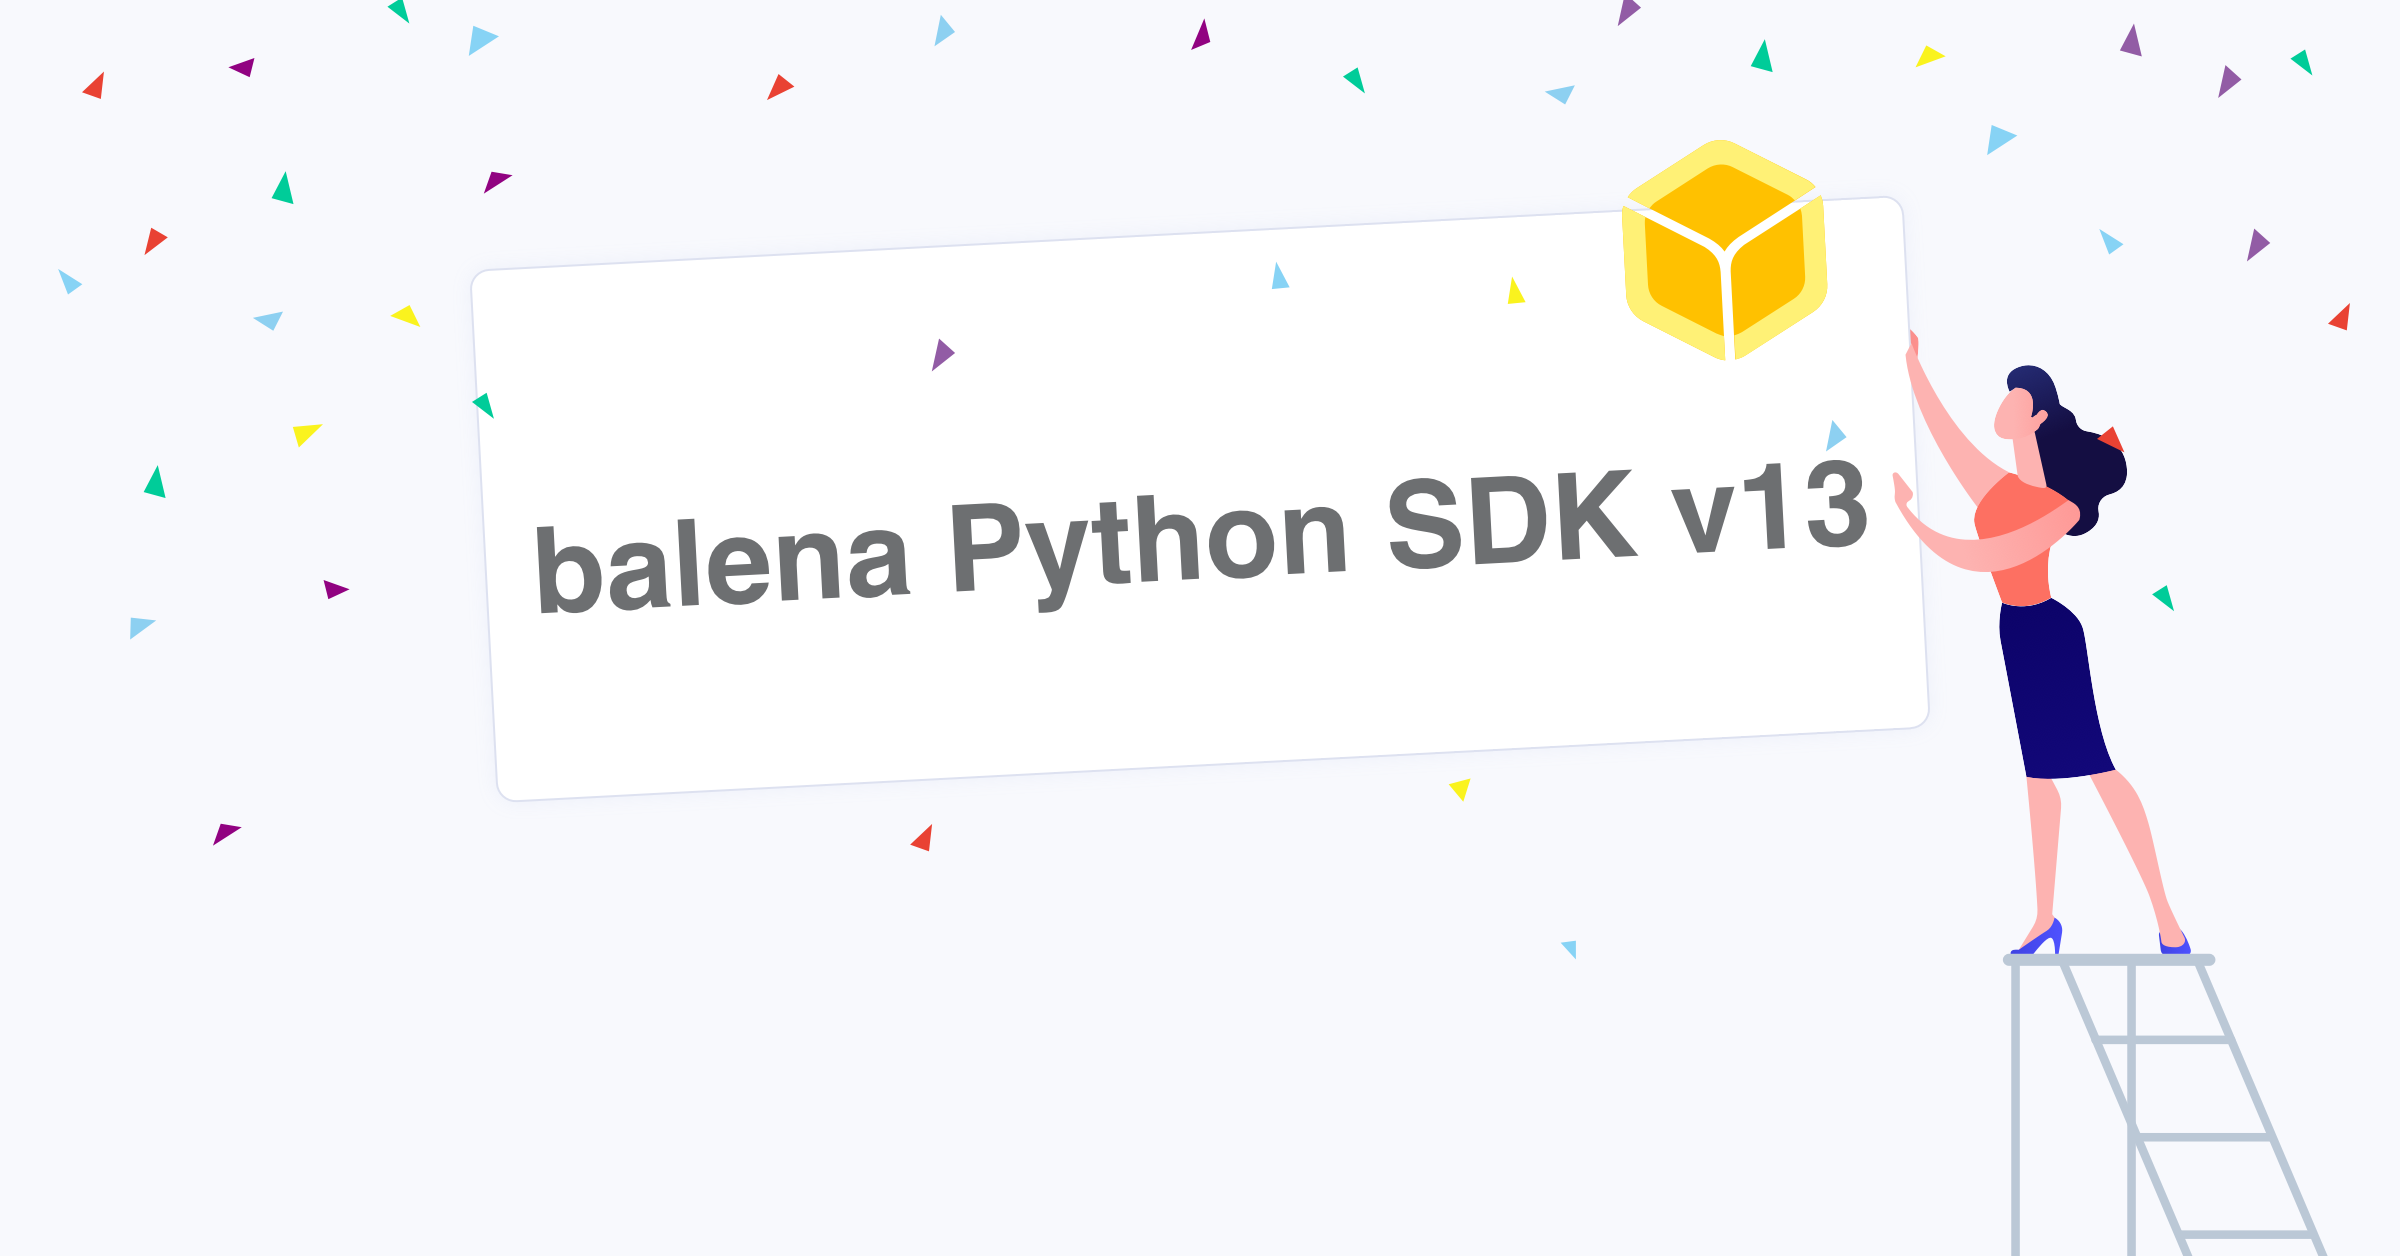 What’s New in Version 13 of Balena Python SDK